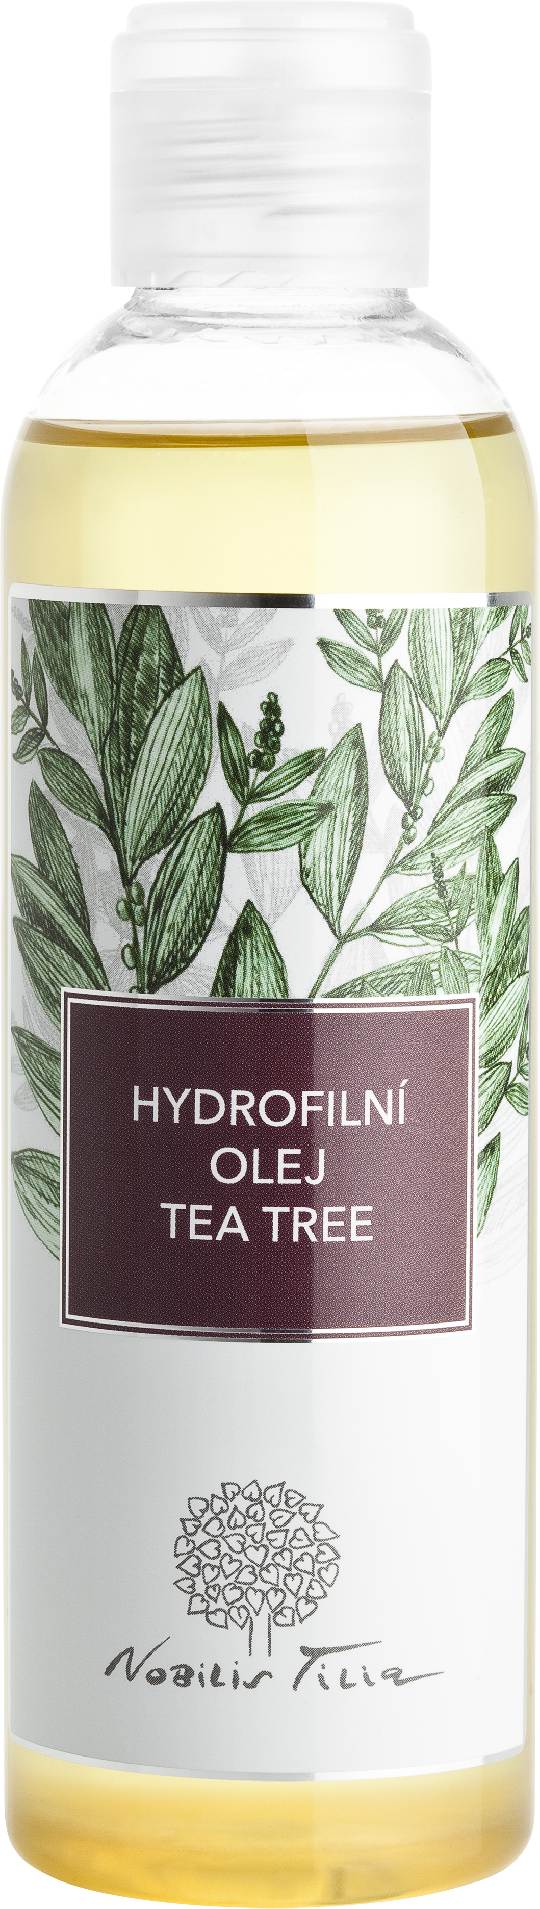 Hydrofilní olej s Tea tree: 200 ml